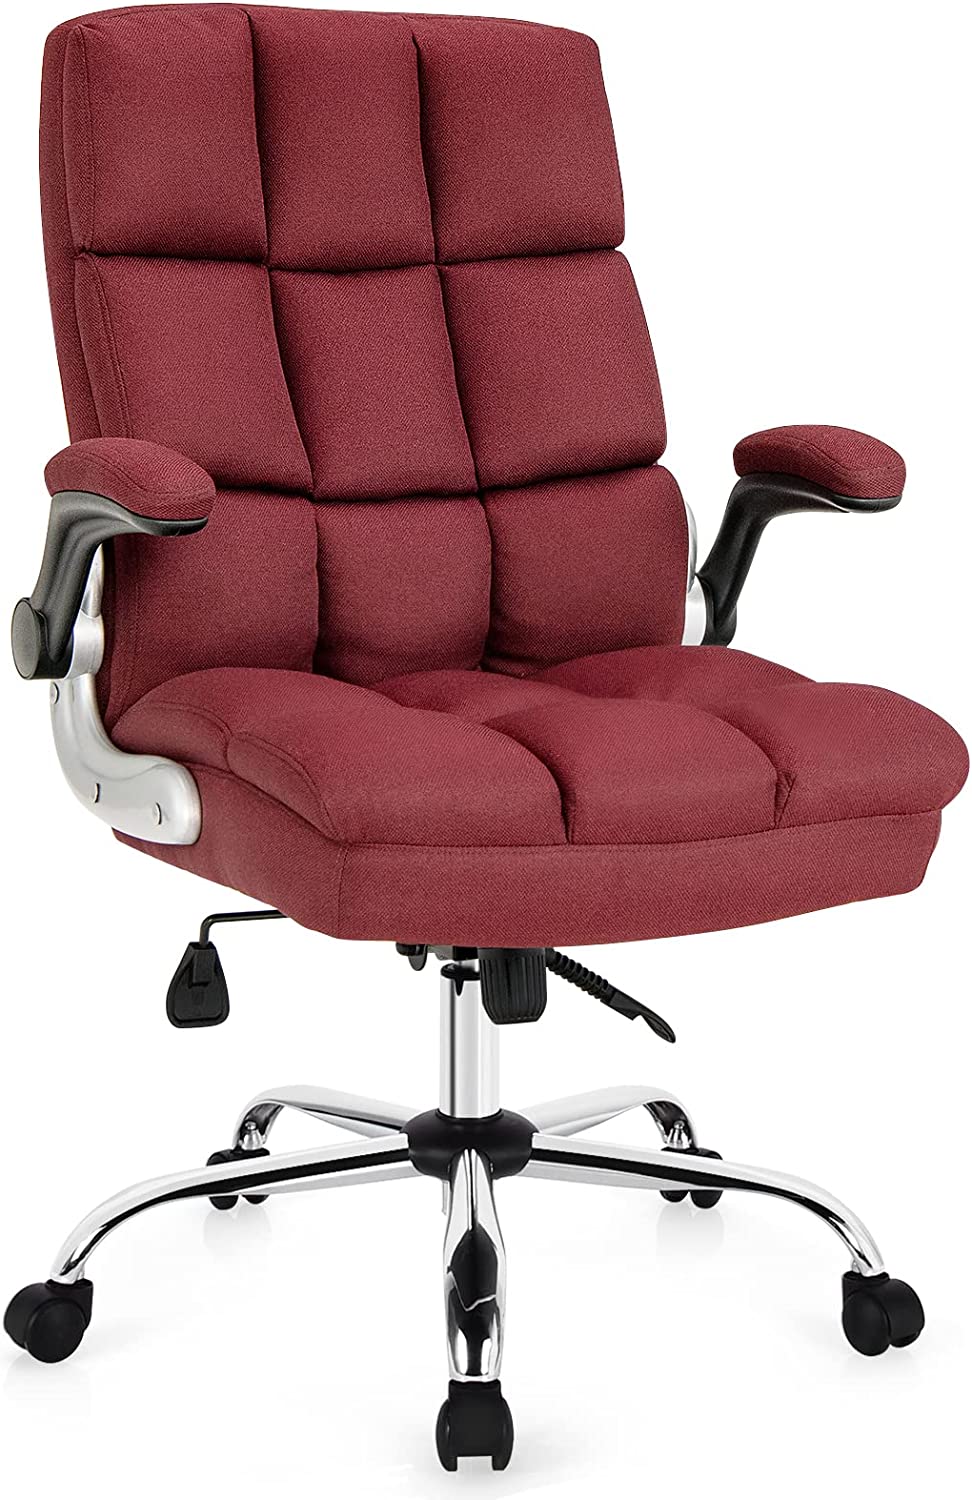 Giantex Executive Office Chair,Adjustable Tilt Angle and Flip-up